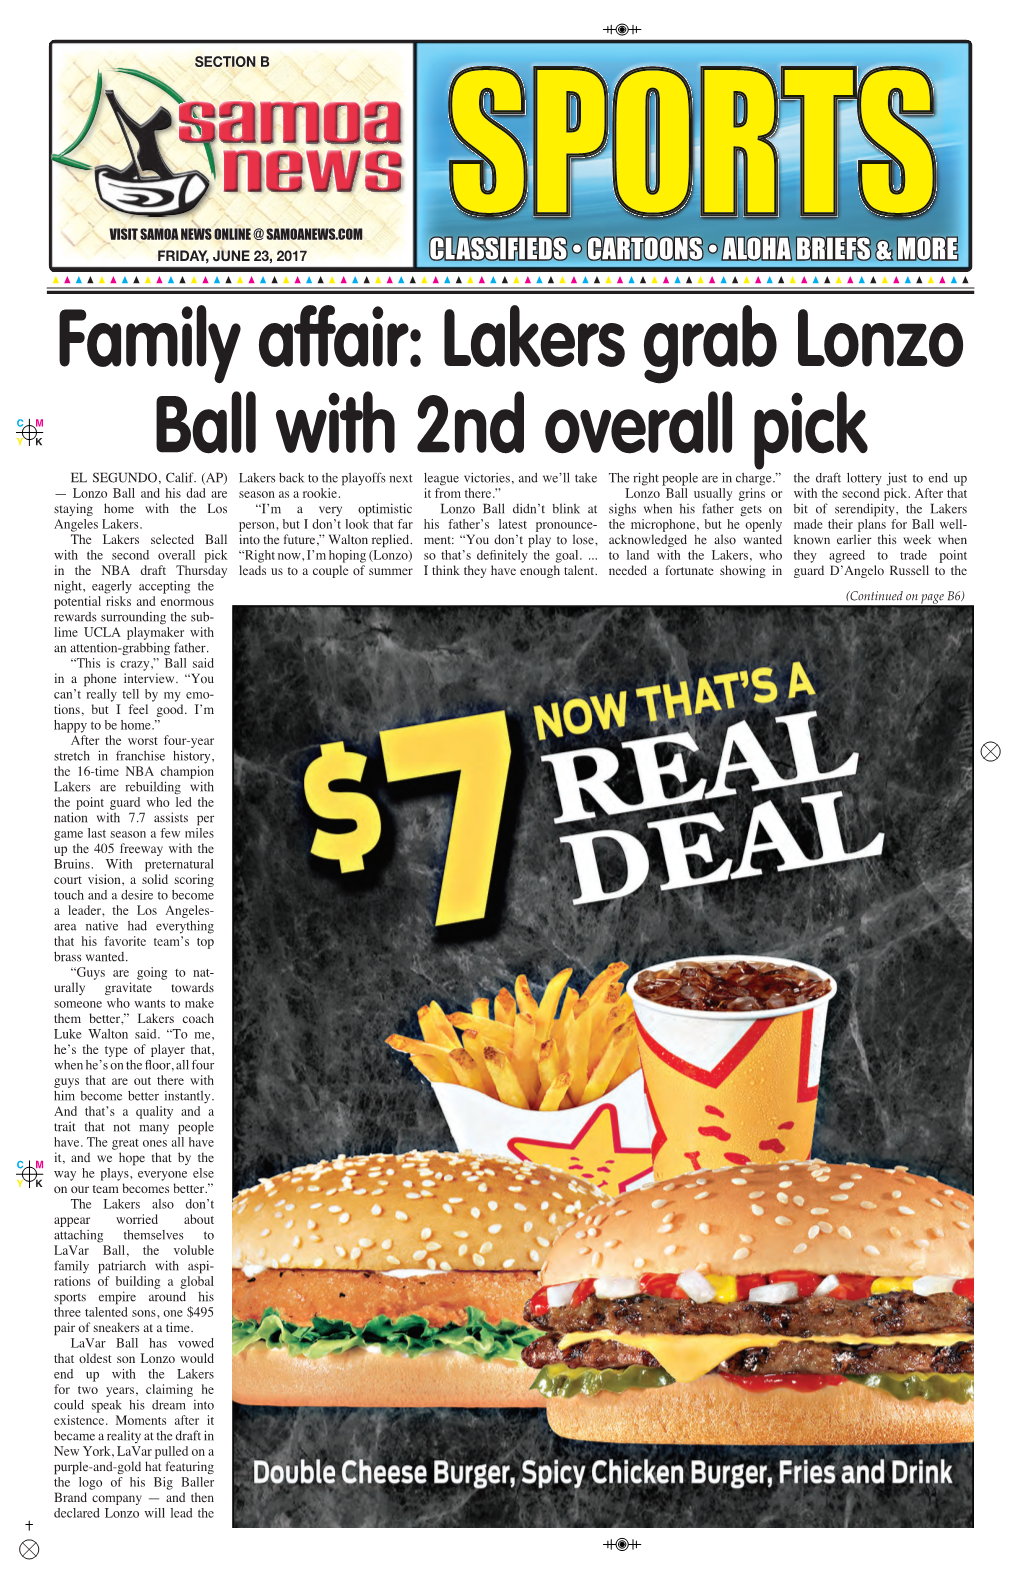 Family Affair: Lakers Grab Lonzo